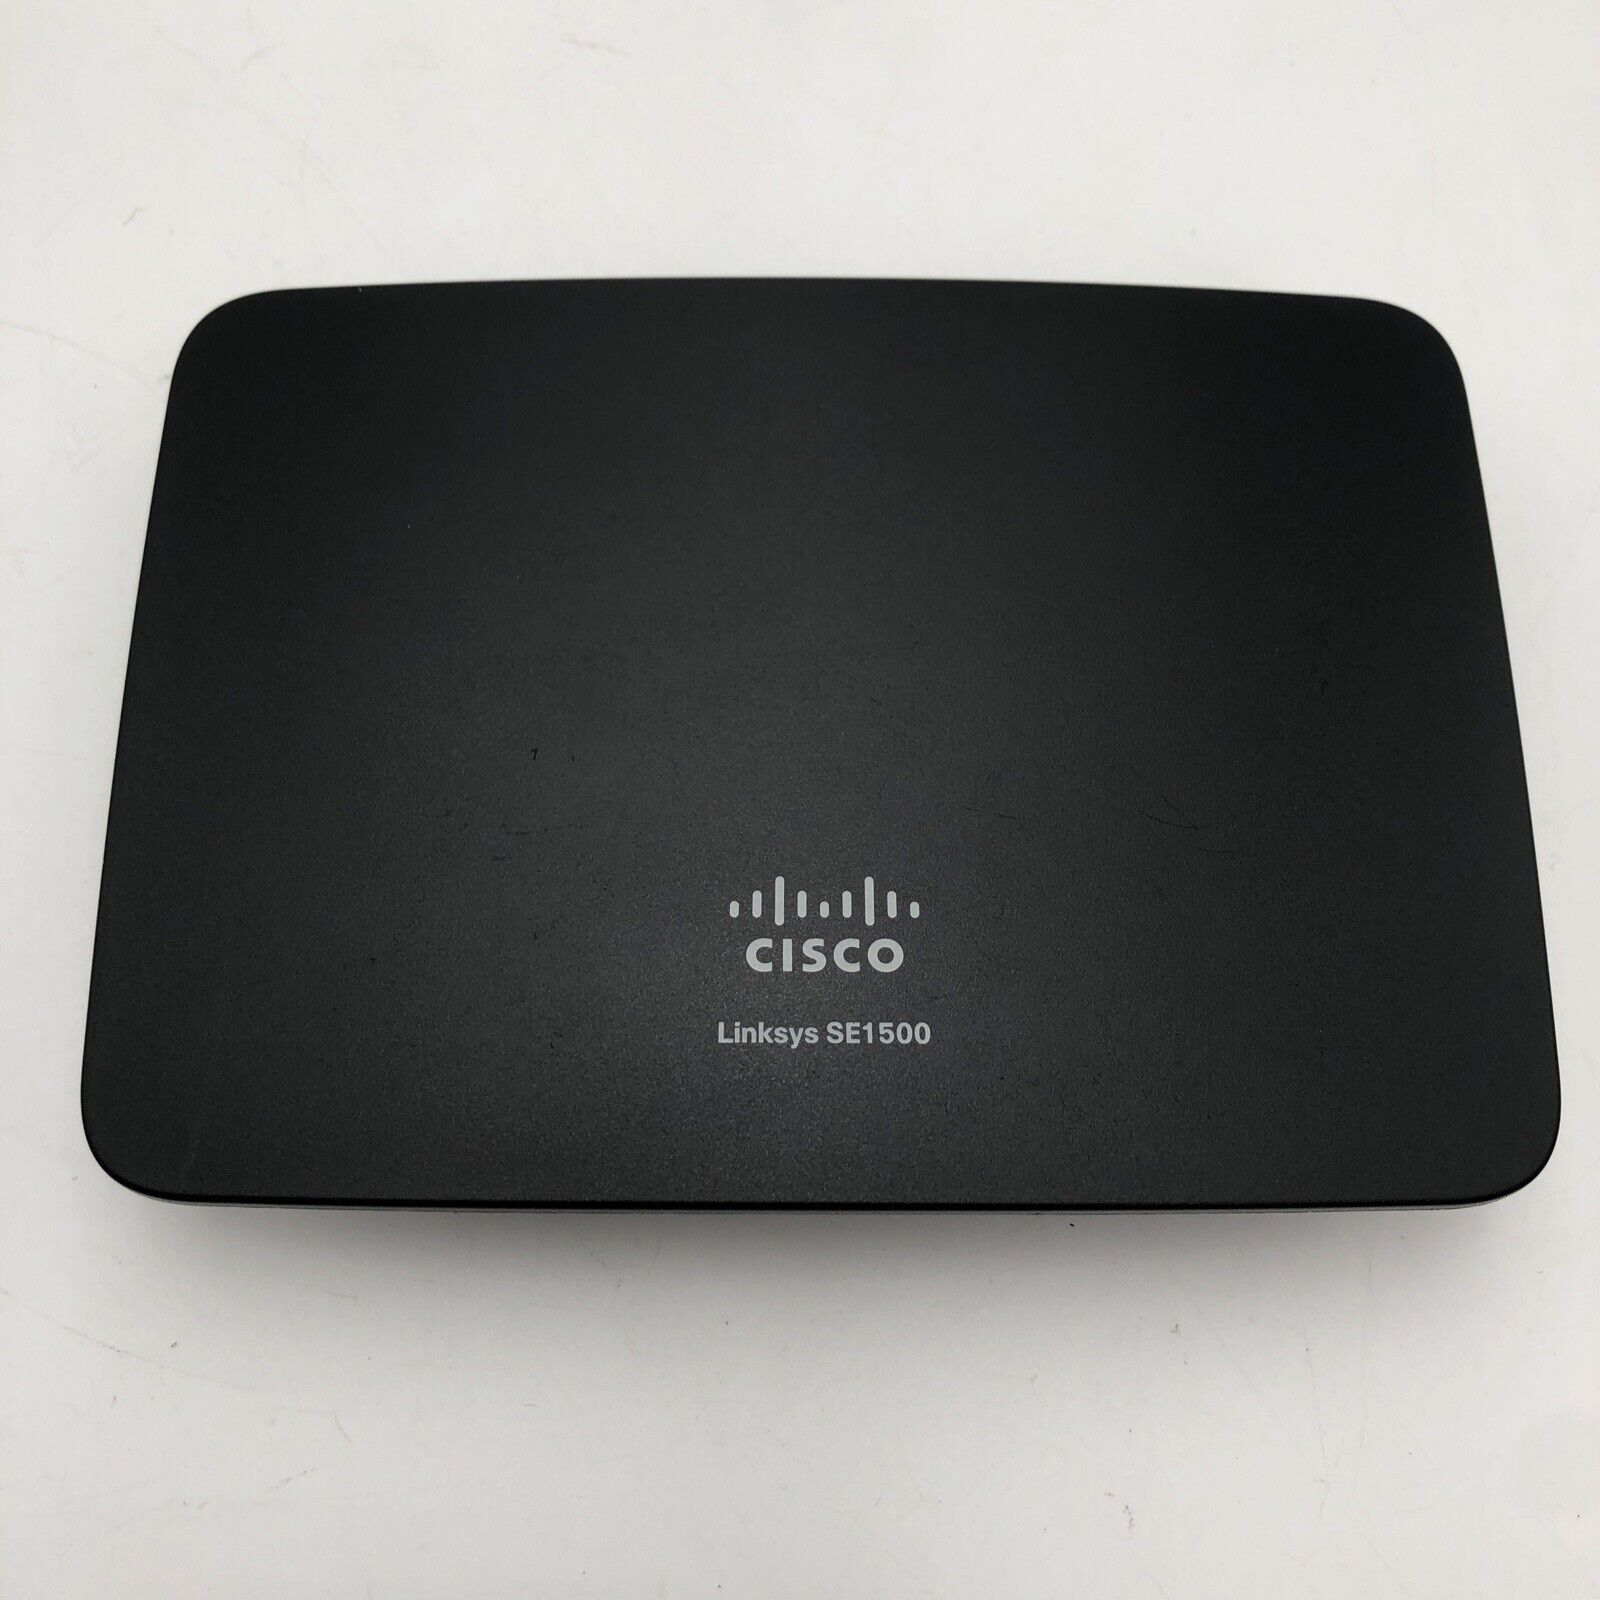 USED Linksys Cisco SE1500 5-Port Gigabit Ethernet Switch Router READ